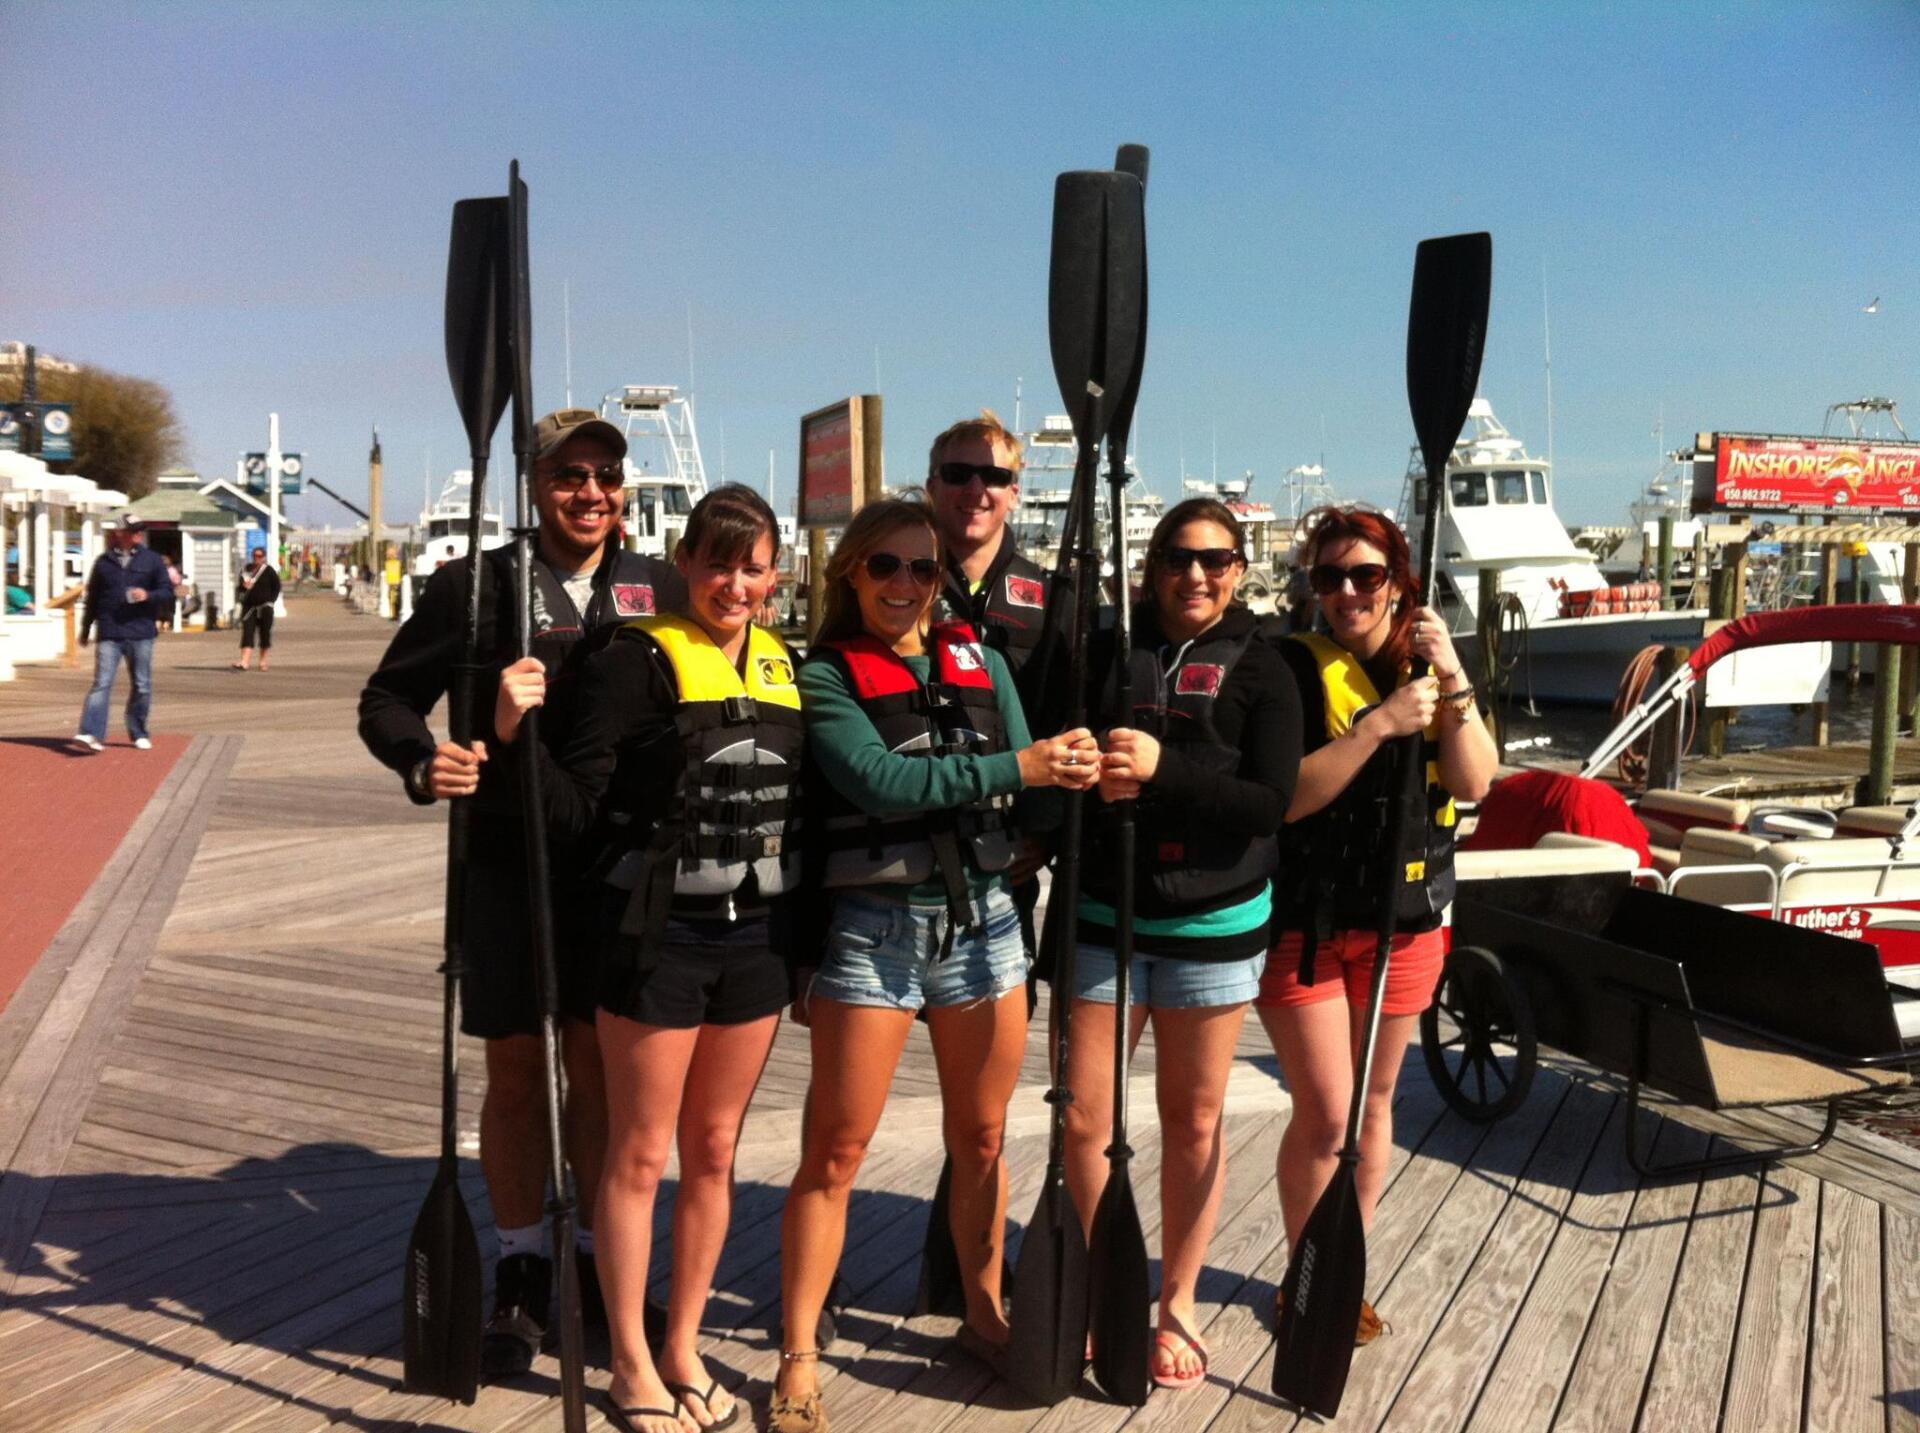 4 females & 2 males holding kayak paddles